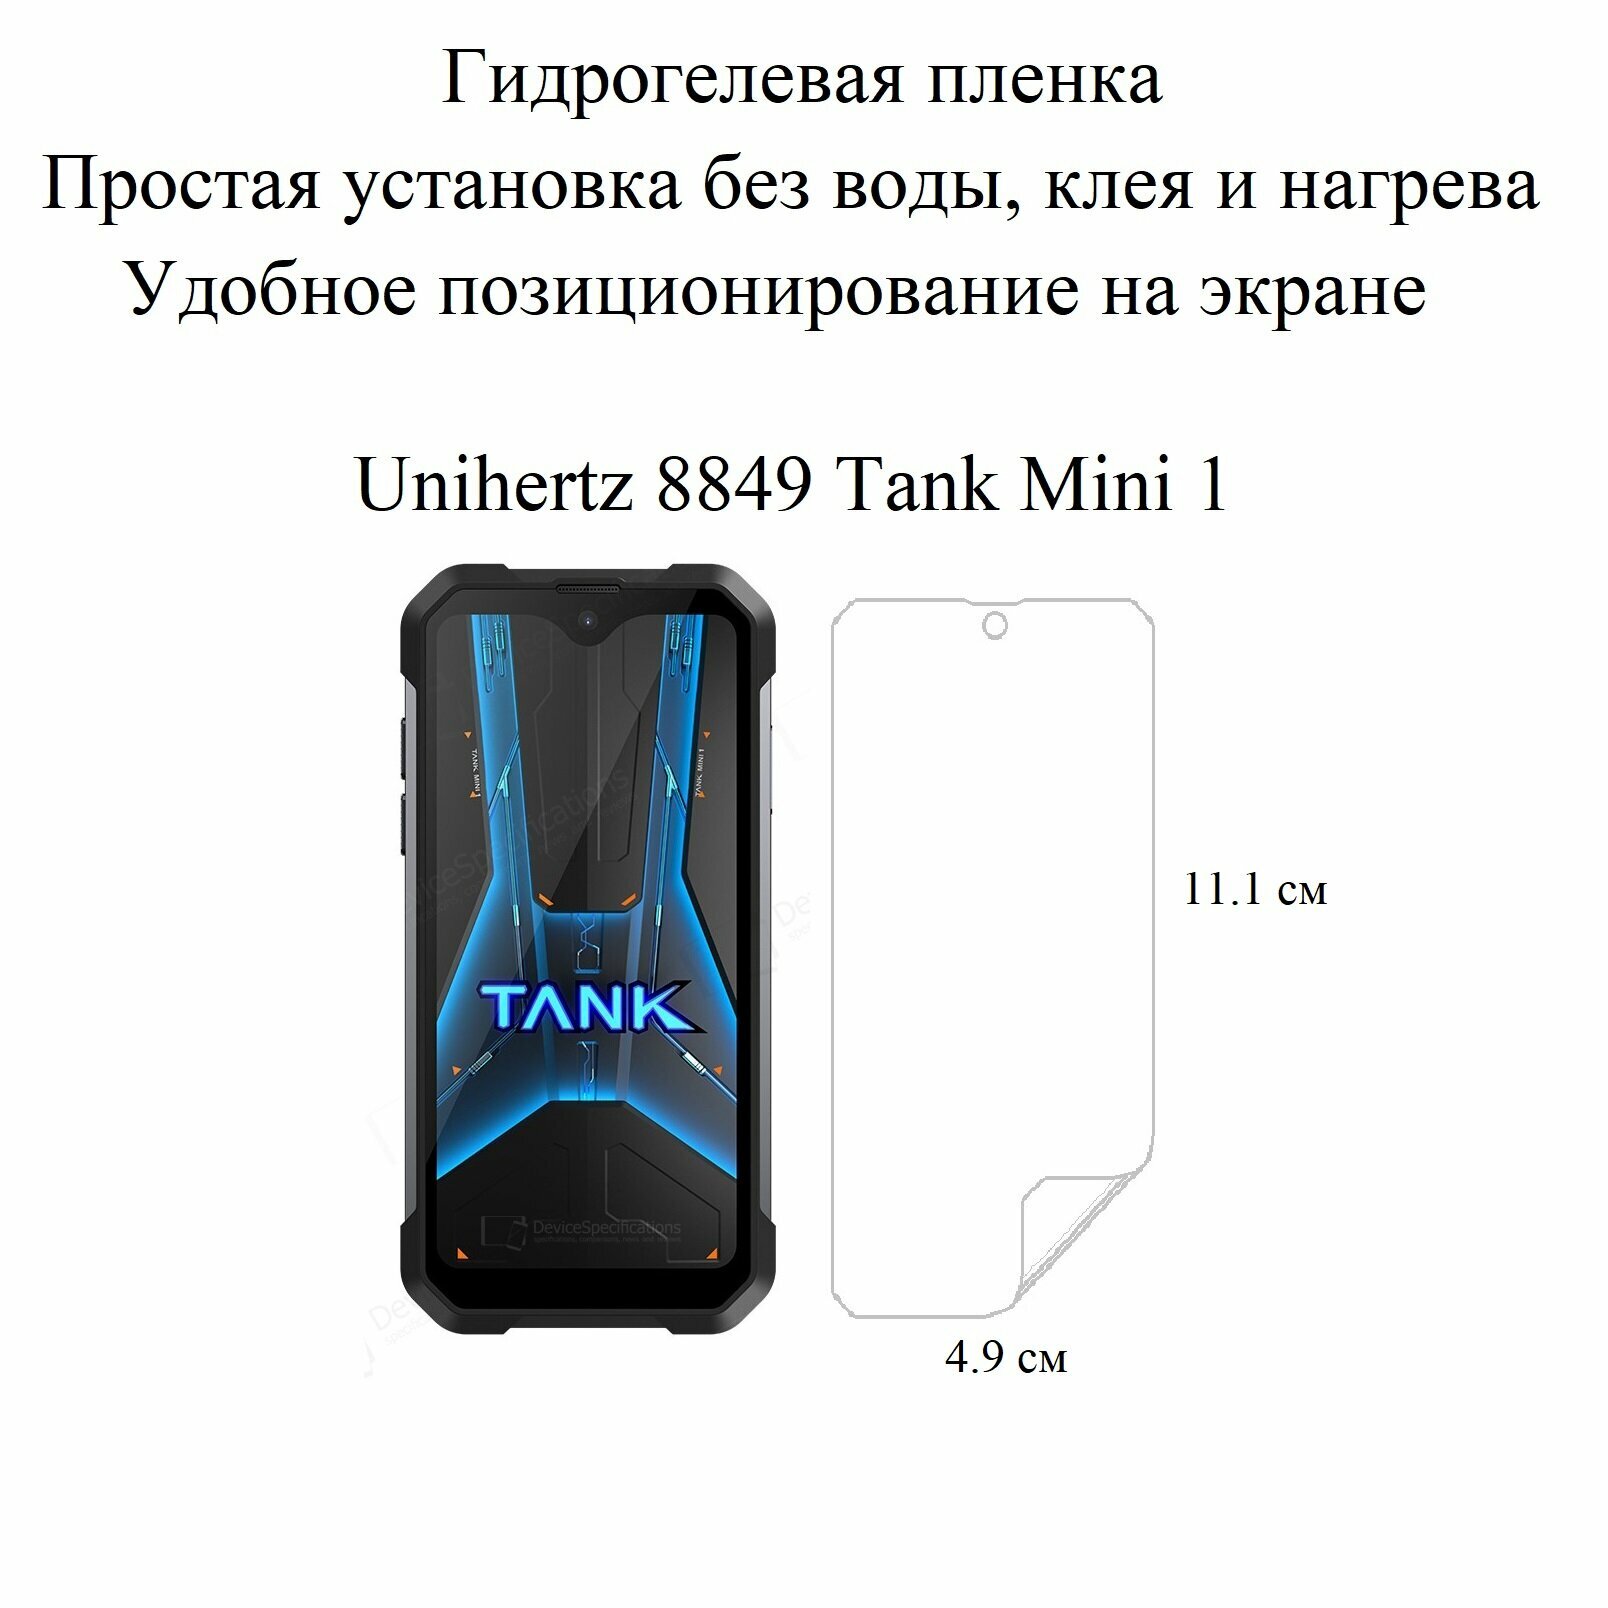 Матовая гидрогелевая пленка hoco. на экран смартфона Unihertz 8849 Tank Mini 1